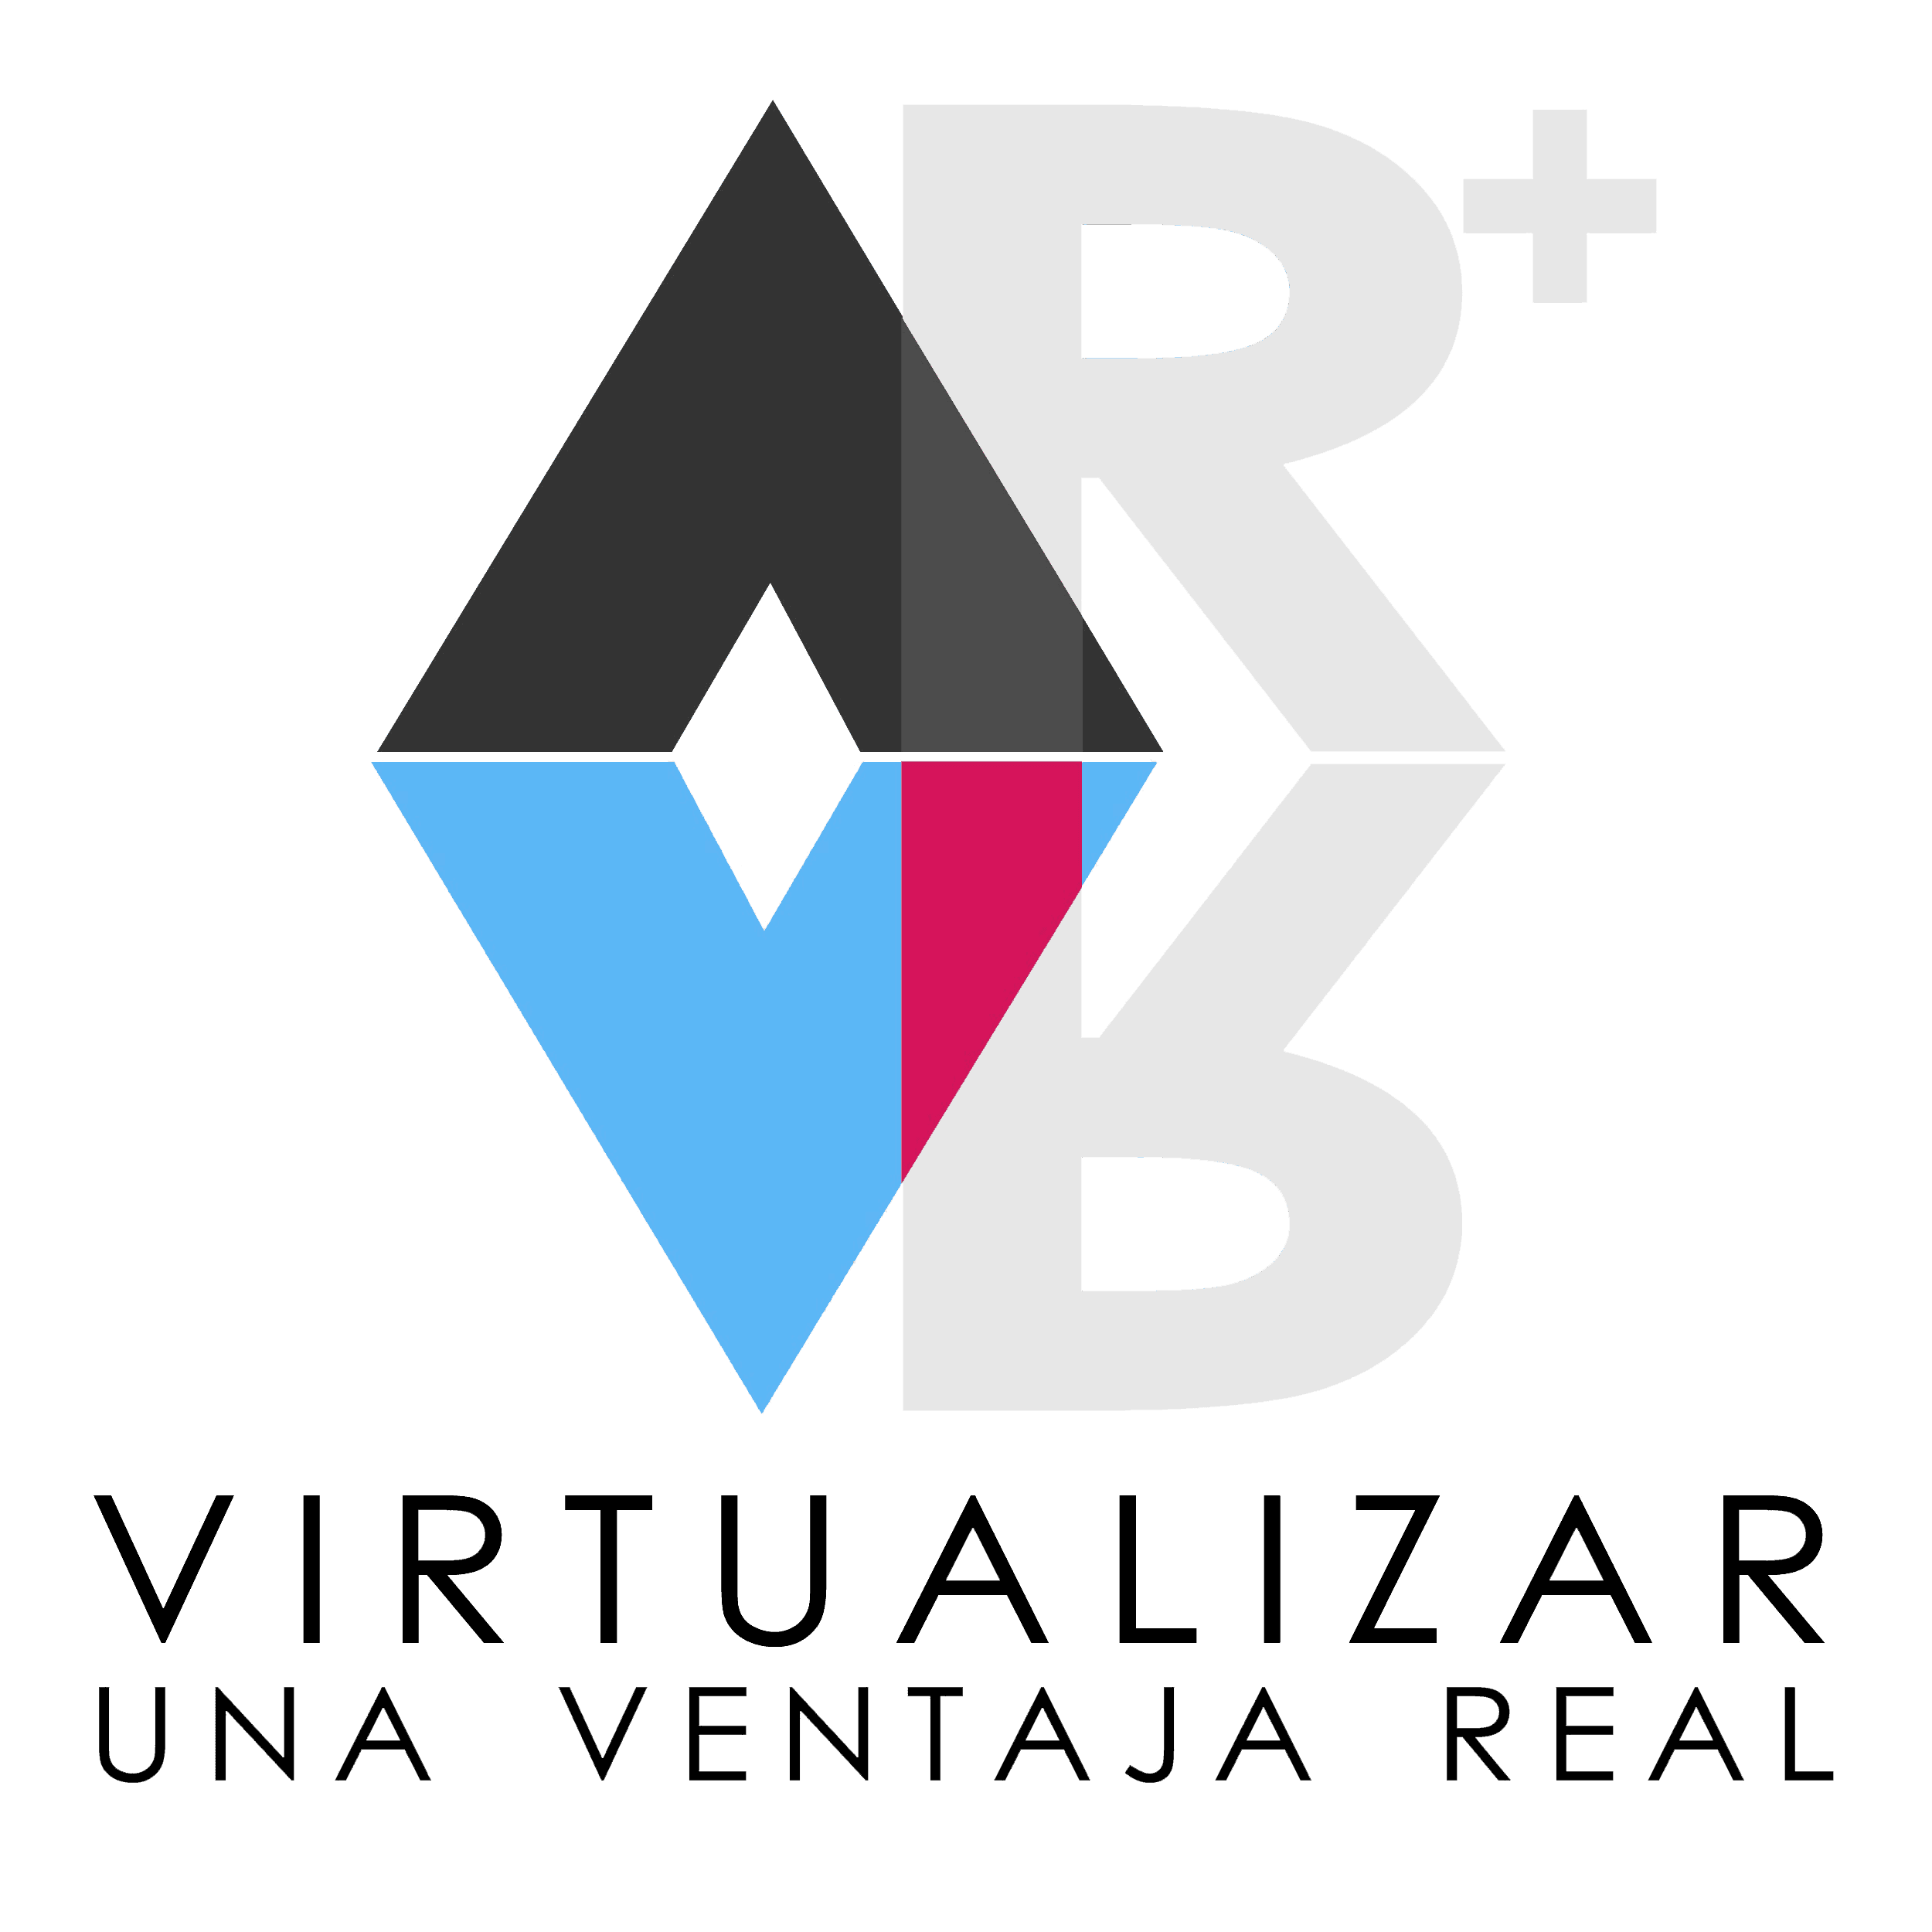 Virtualizar: Realidad aumentada Chile, Realidad Virtual Chile, Metaverso Chile